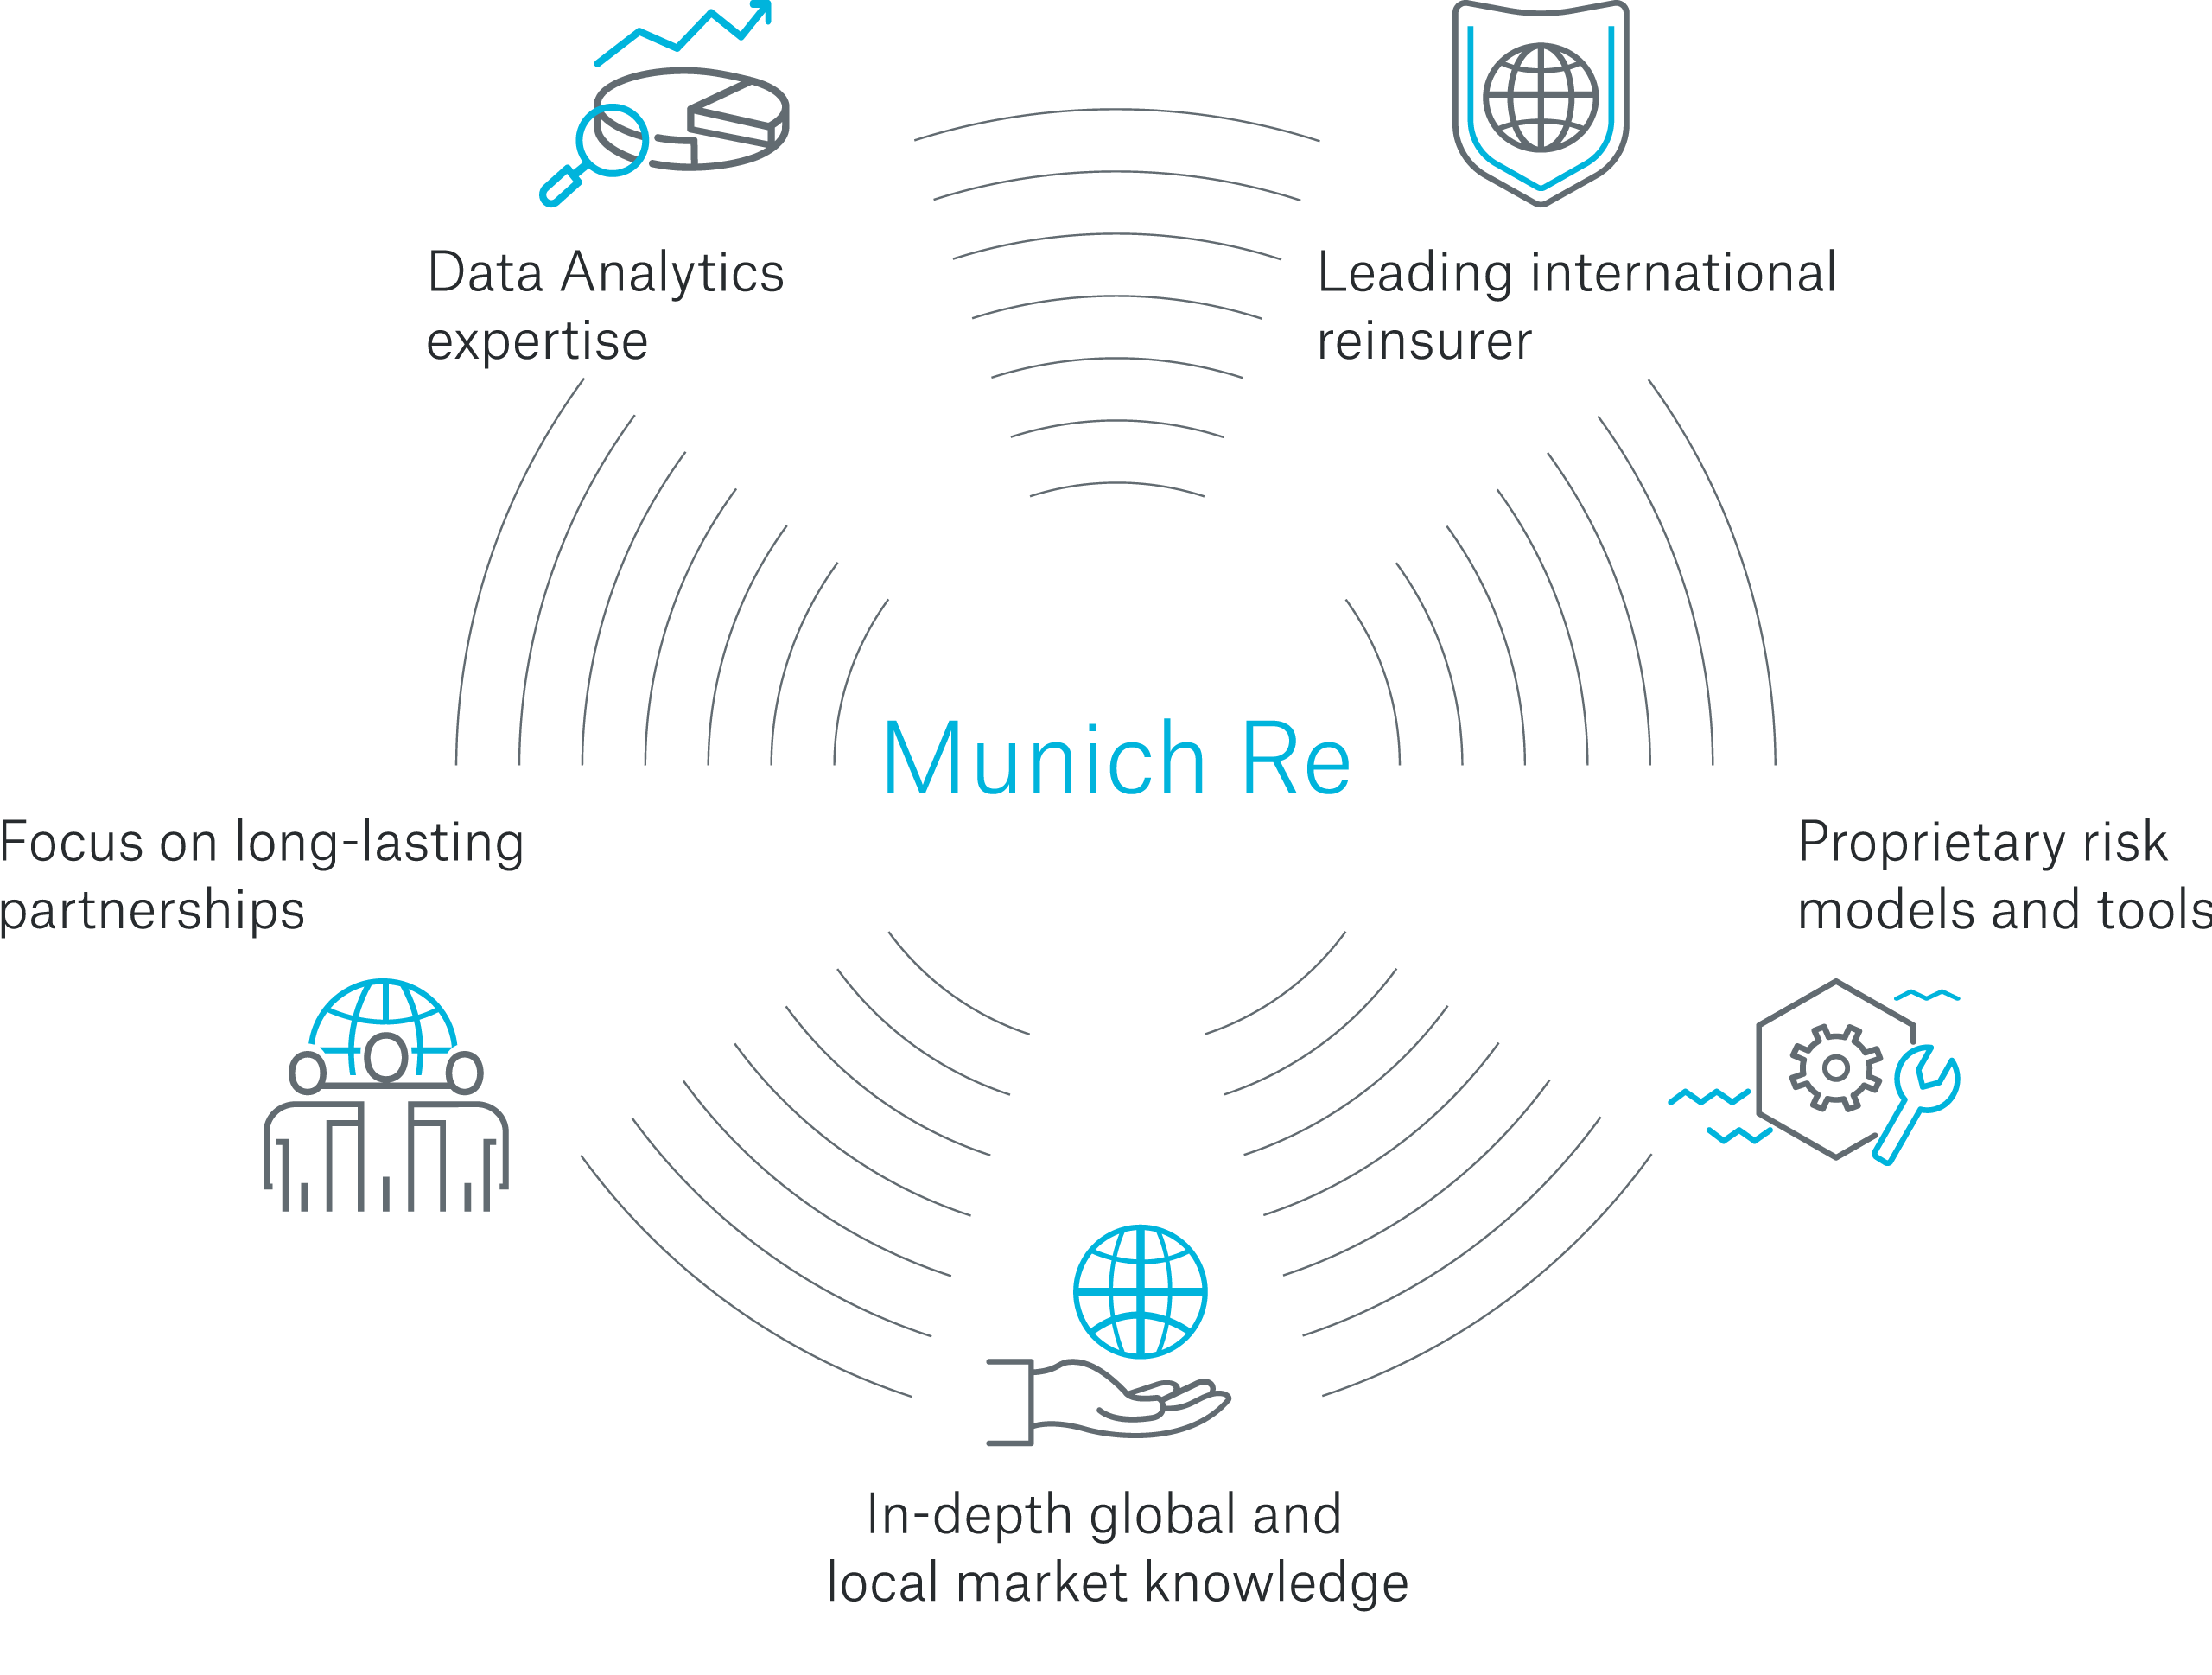 Profit from Munich Re's data analytics expertise